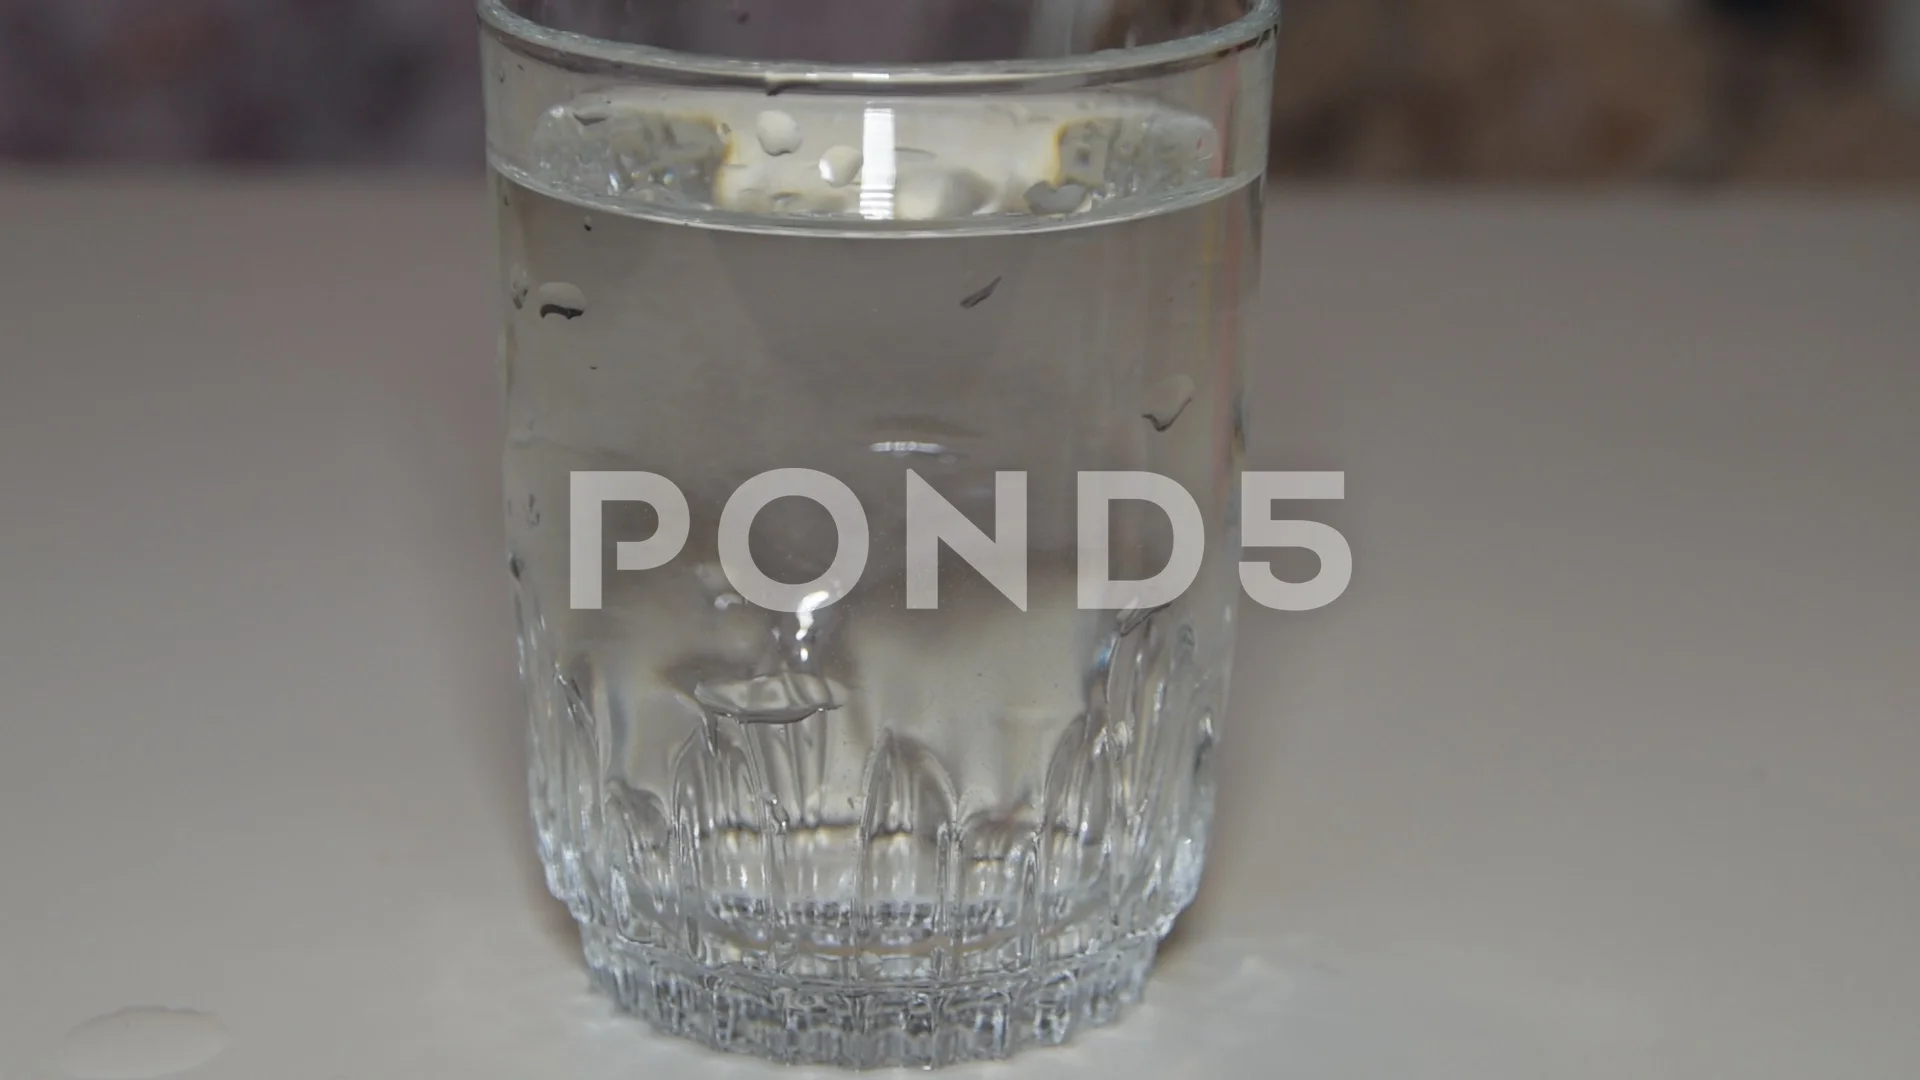 https://images.pond5.com/brush-paint-glass-water-mix-footage-126327900_prevstill.jpeg